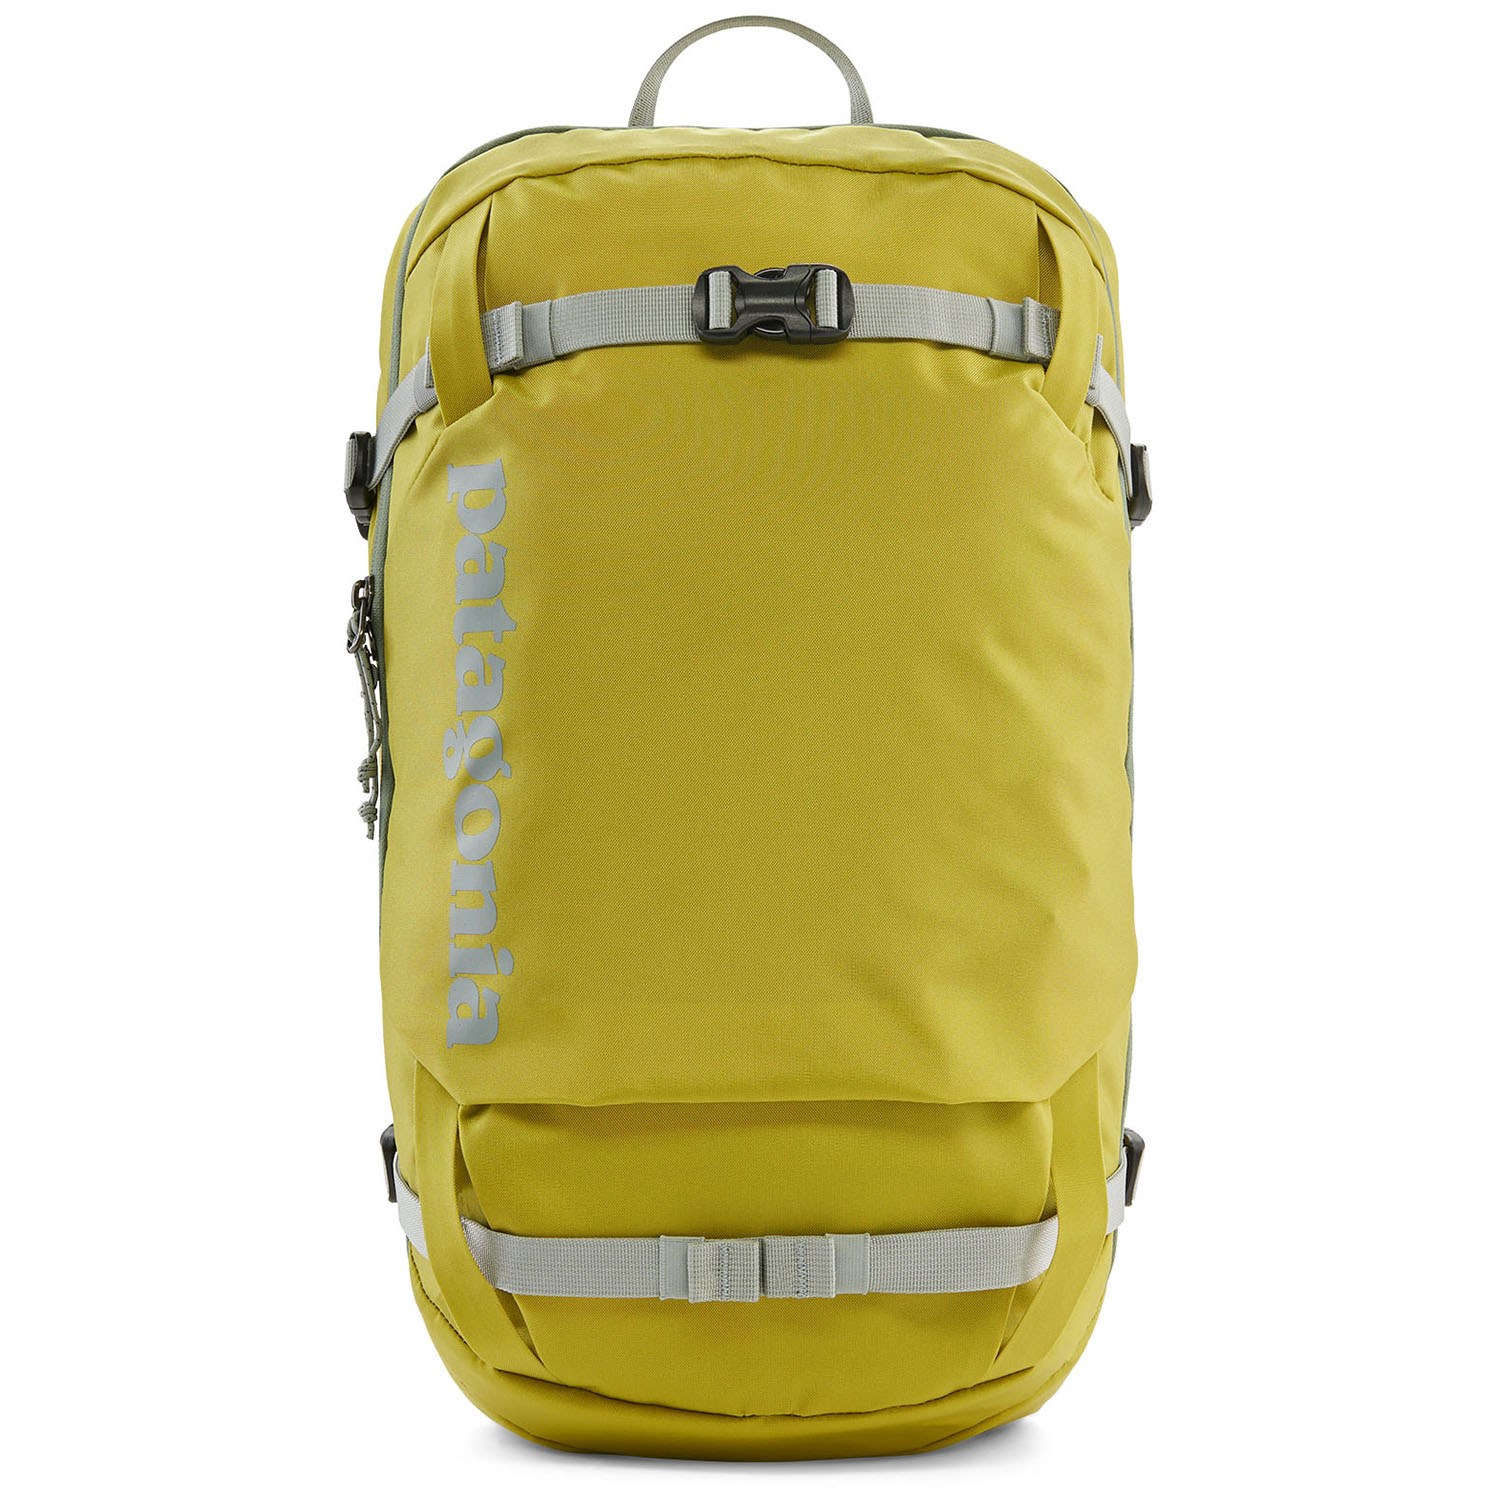 1 PC Hanging Garment Bags for Storage Travel Suit Bag Dress Shirt Coat 54 inch